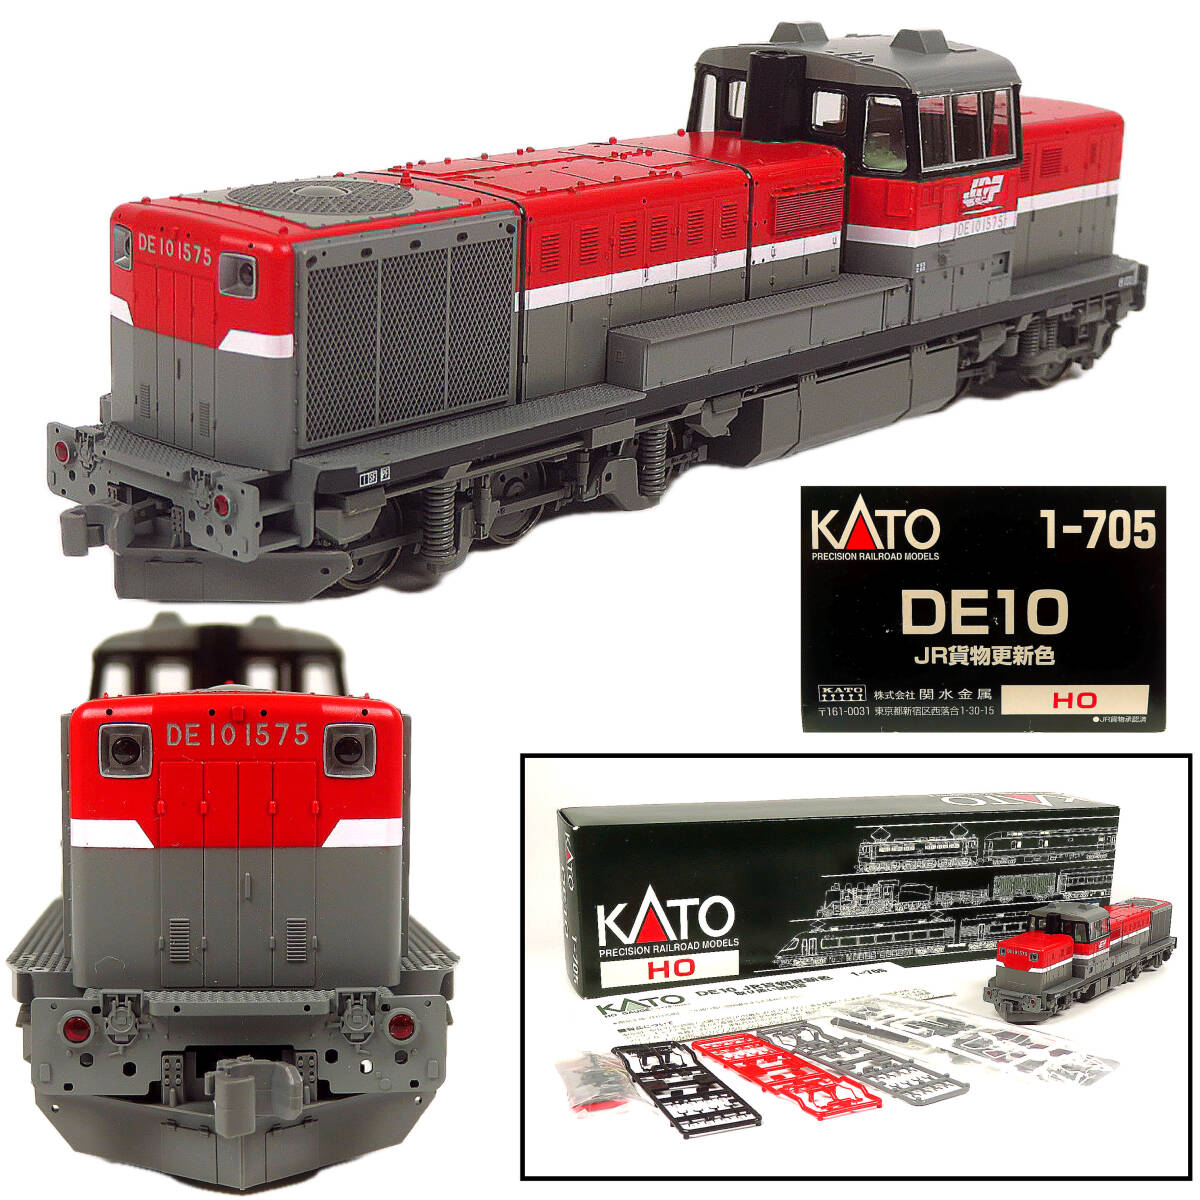 【SAKURAYA】コレクター整理品【KATO カトー 1-705 DE10 JR貨物更新色】鉄道模型 機関車 玩具 HOゲージの画像1